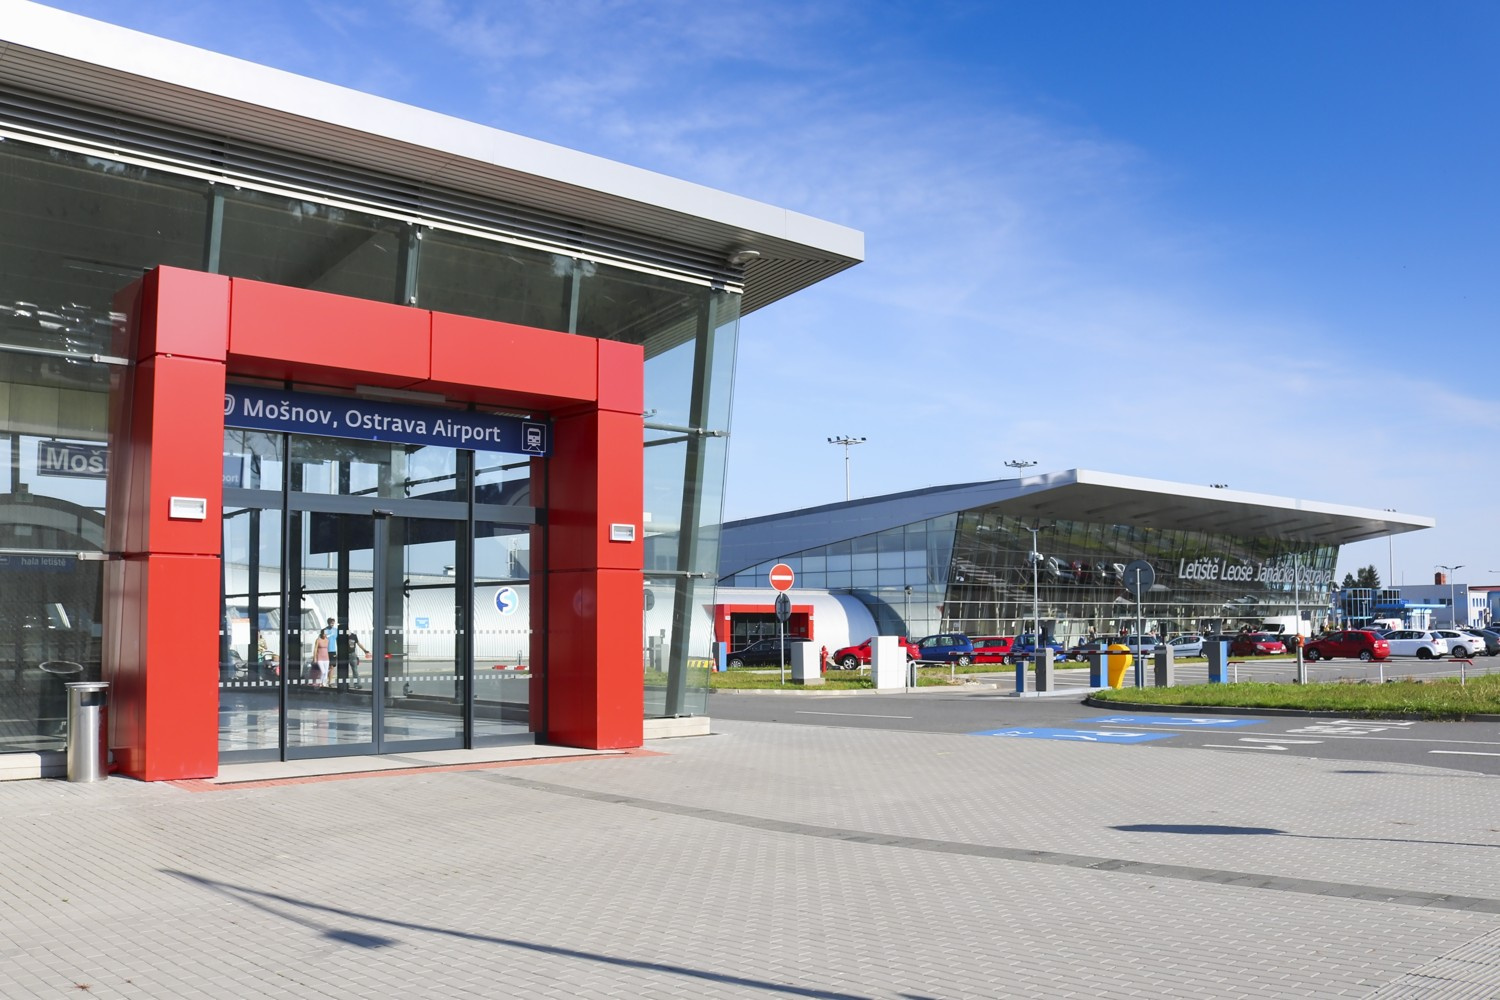 Kiwi.com and Ostrava Airport